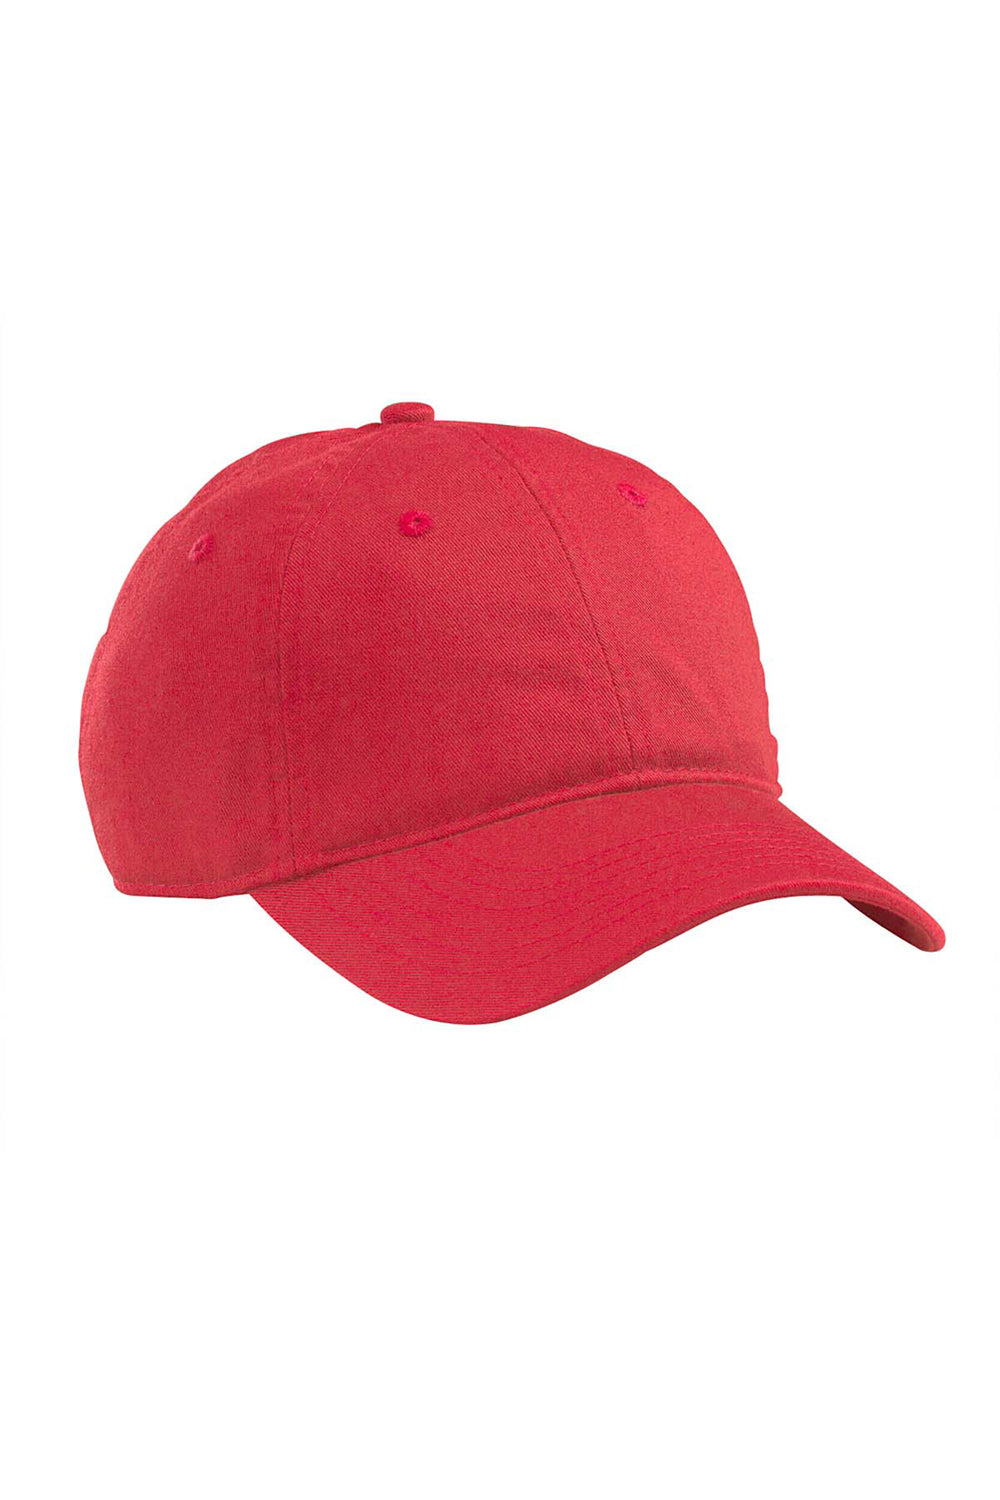 Econscious EC7000 Mens Adjustable Hat Red Front